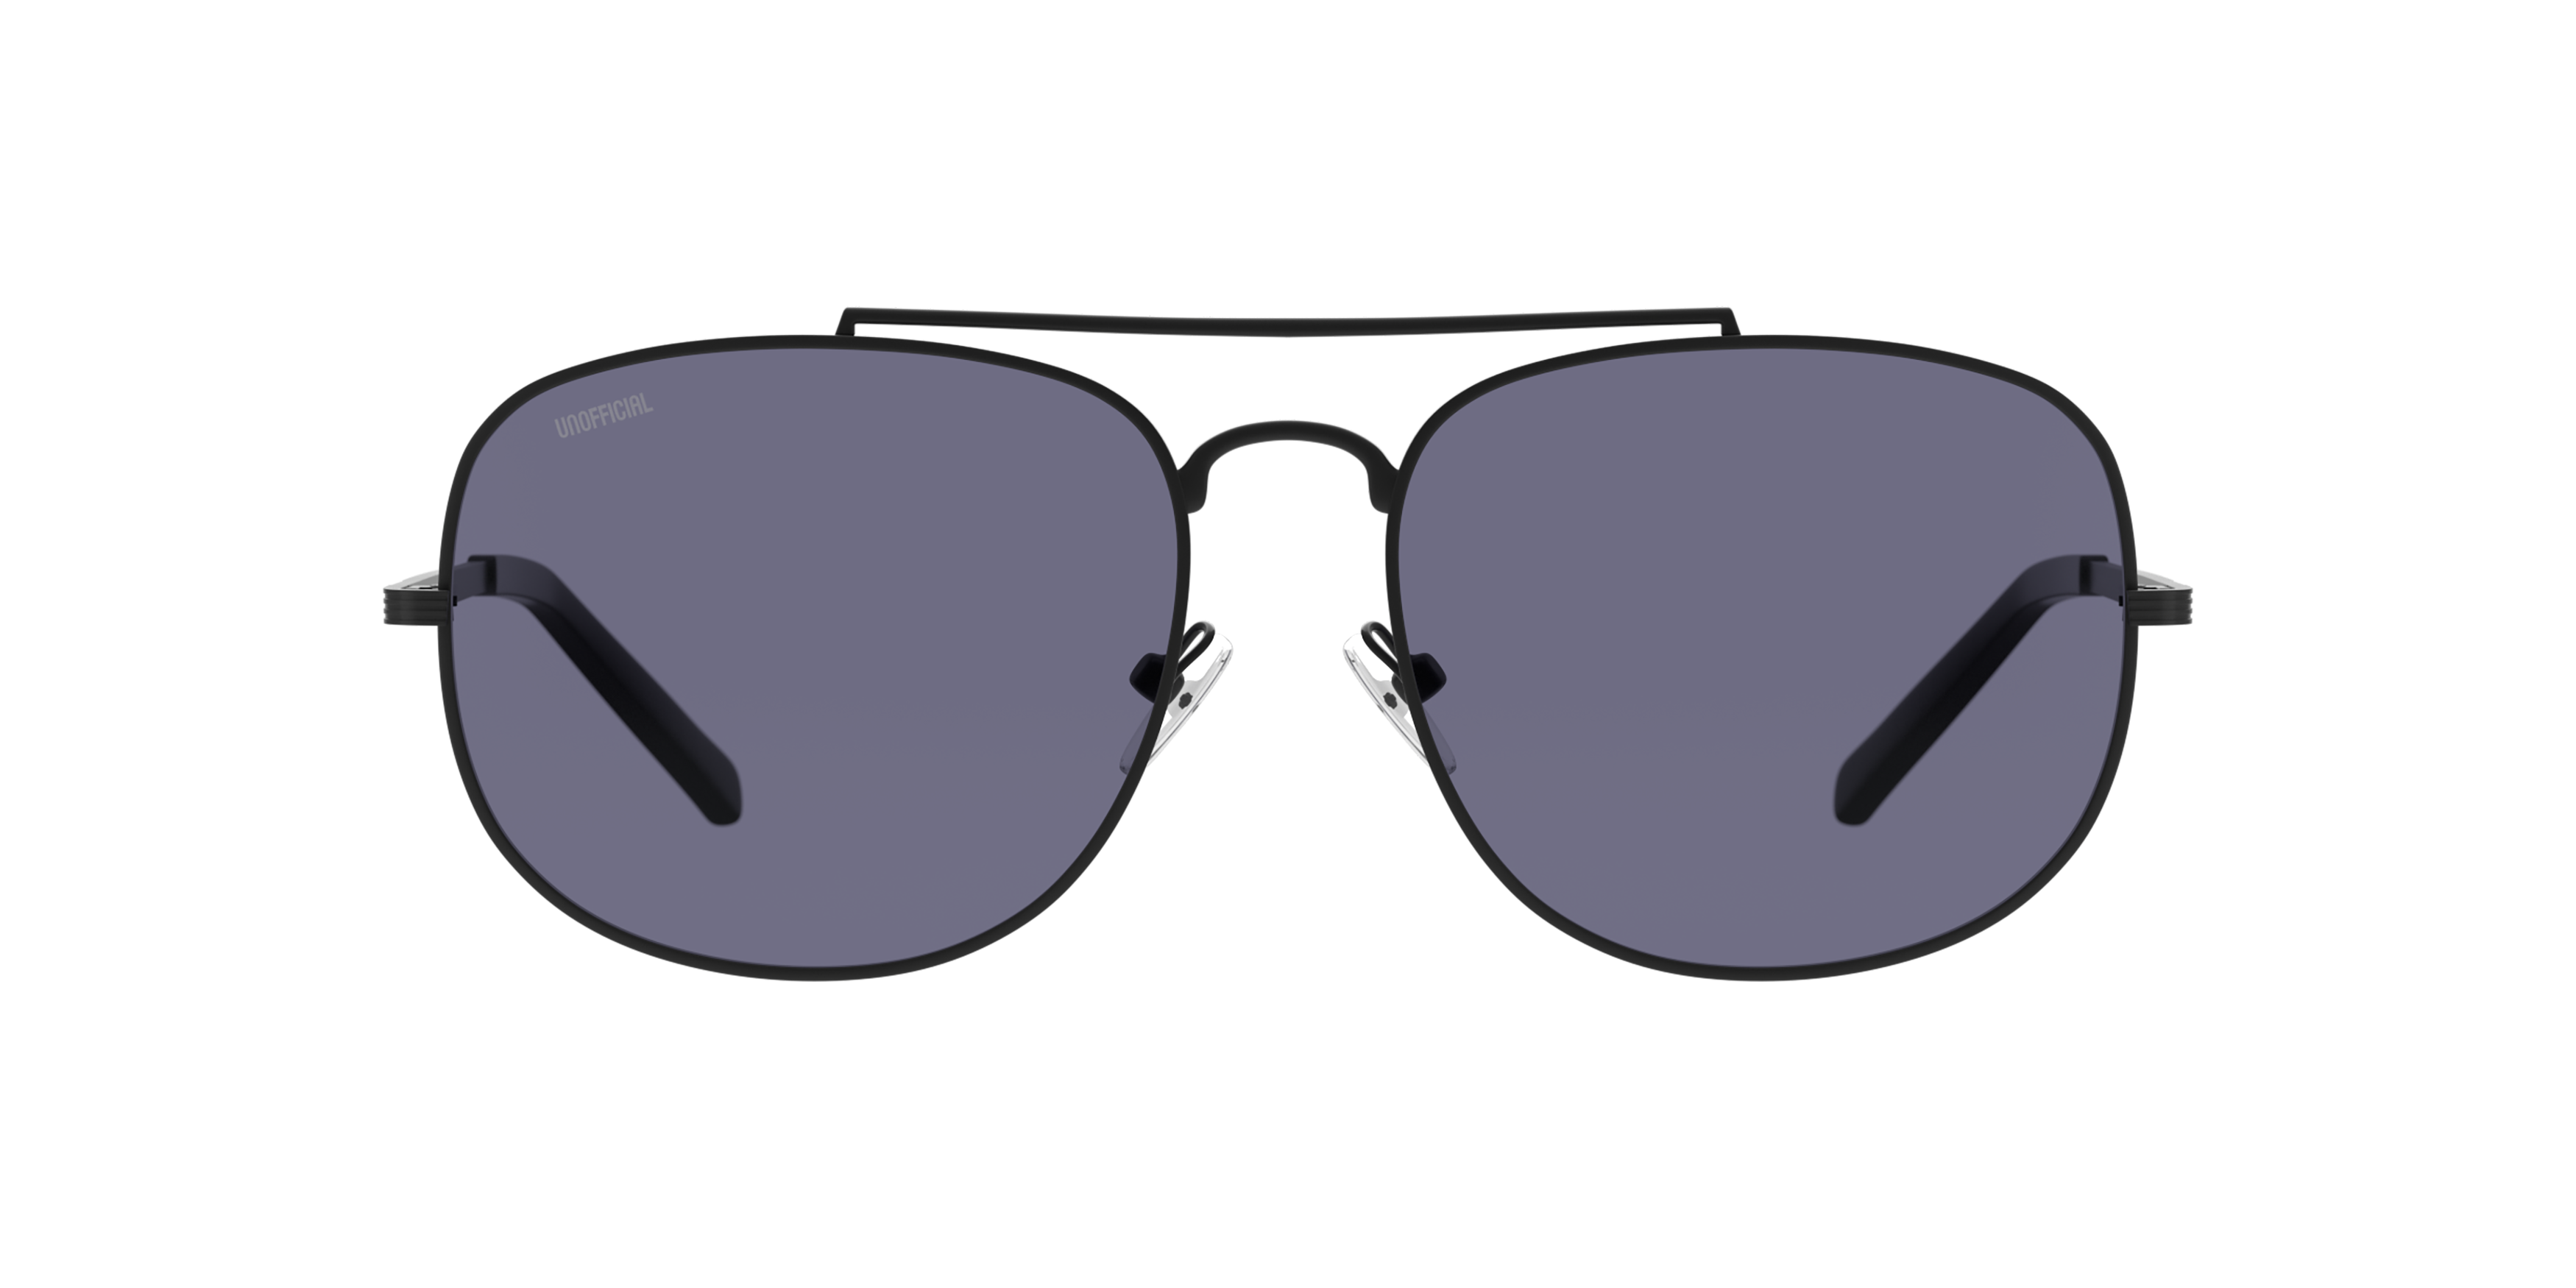 Front Unofficial UNSM0099 (BBG0) Sunglasses Grey / Black